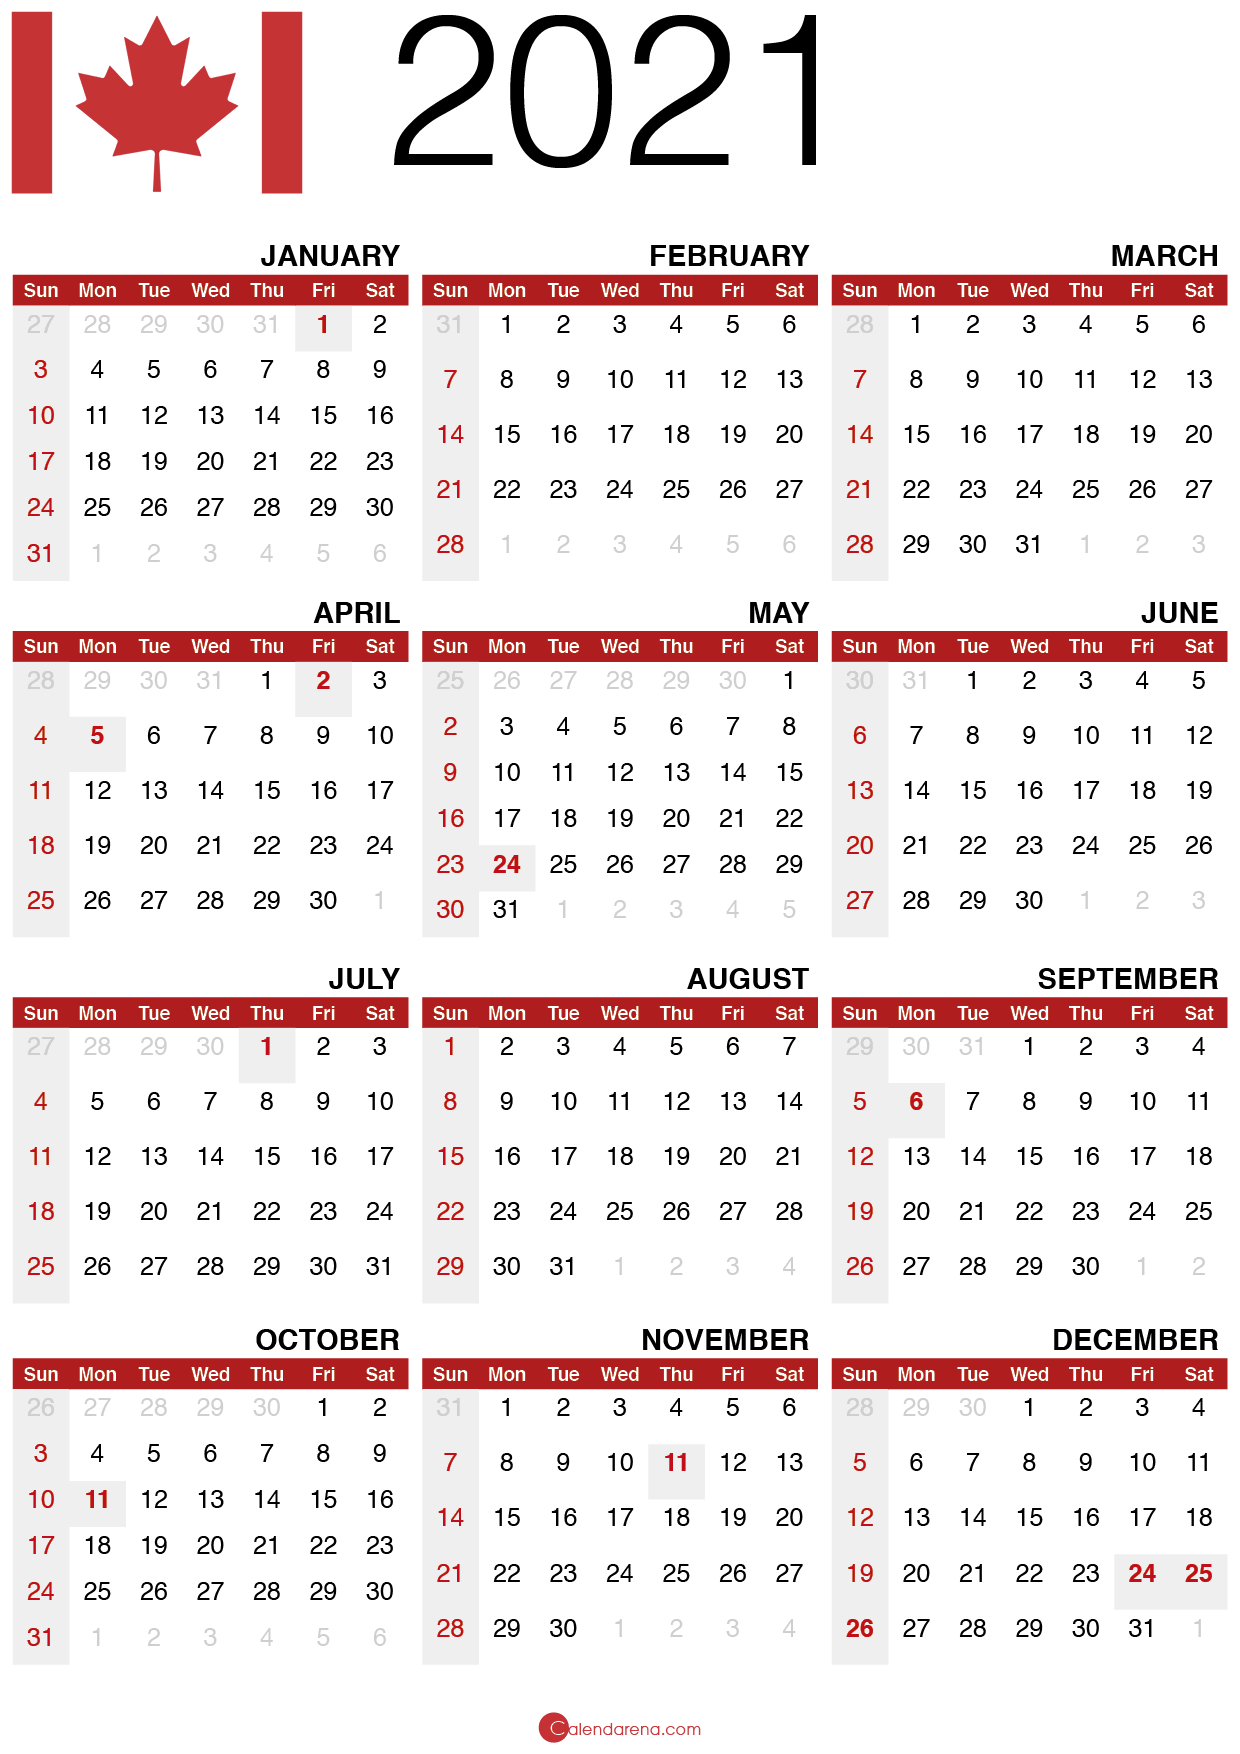 Download free 🇨🇦 2021 calendar canada 🇨🇦 - Calendarena